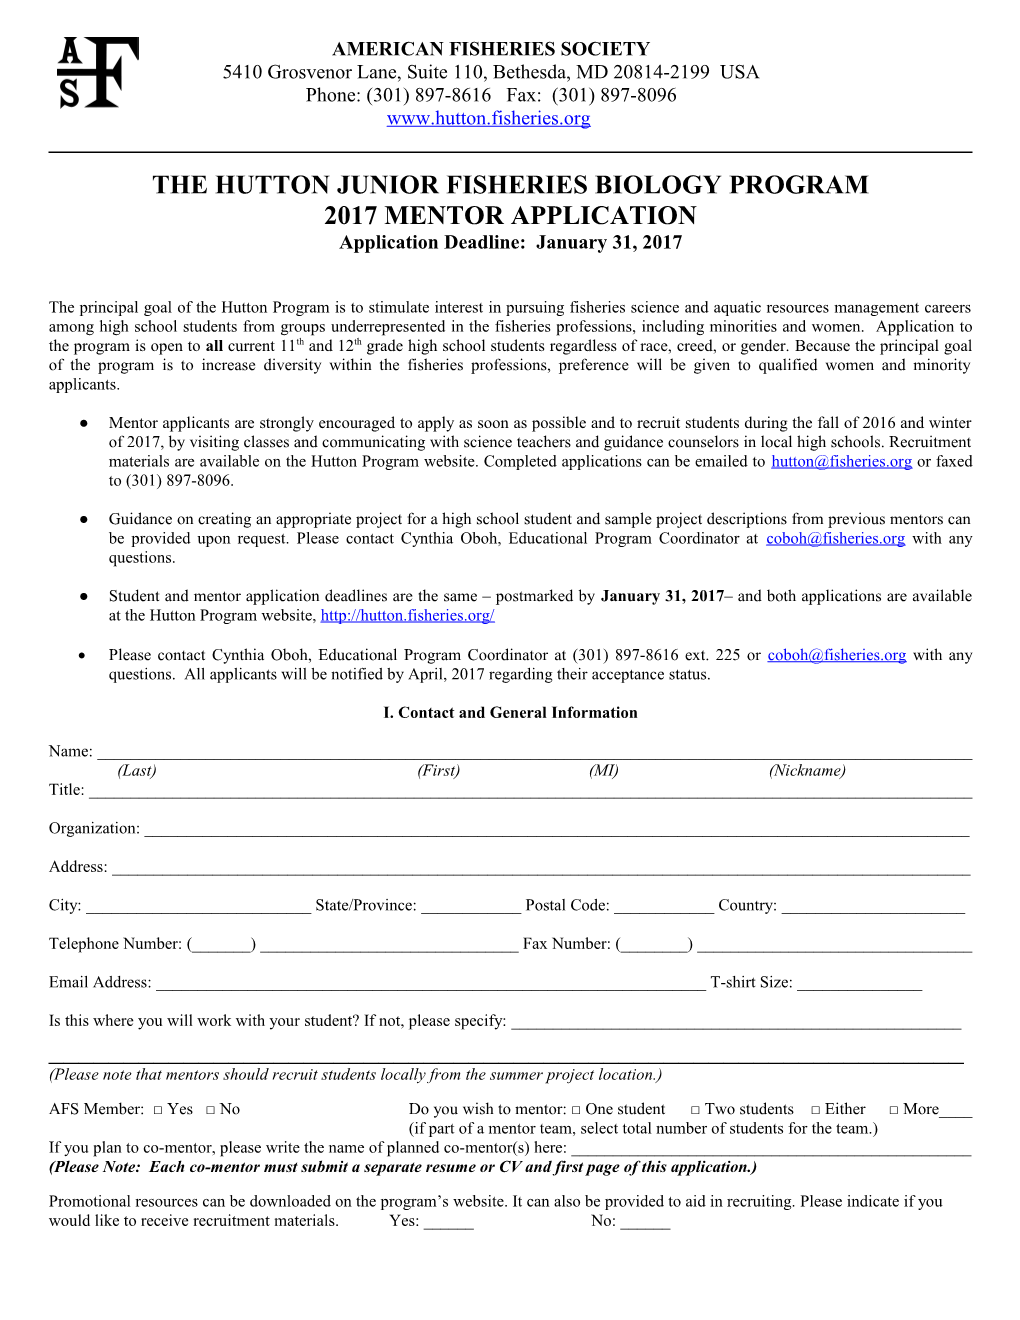 The Hutton Junior Fisheries Biology Program